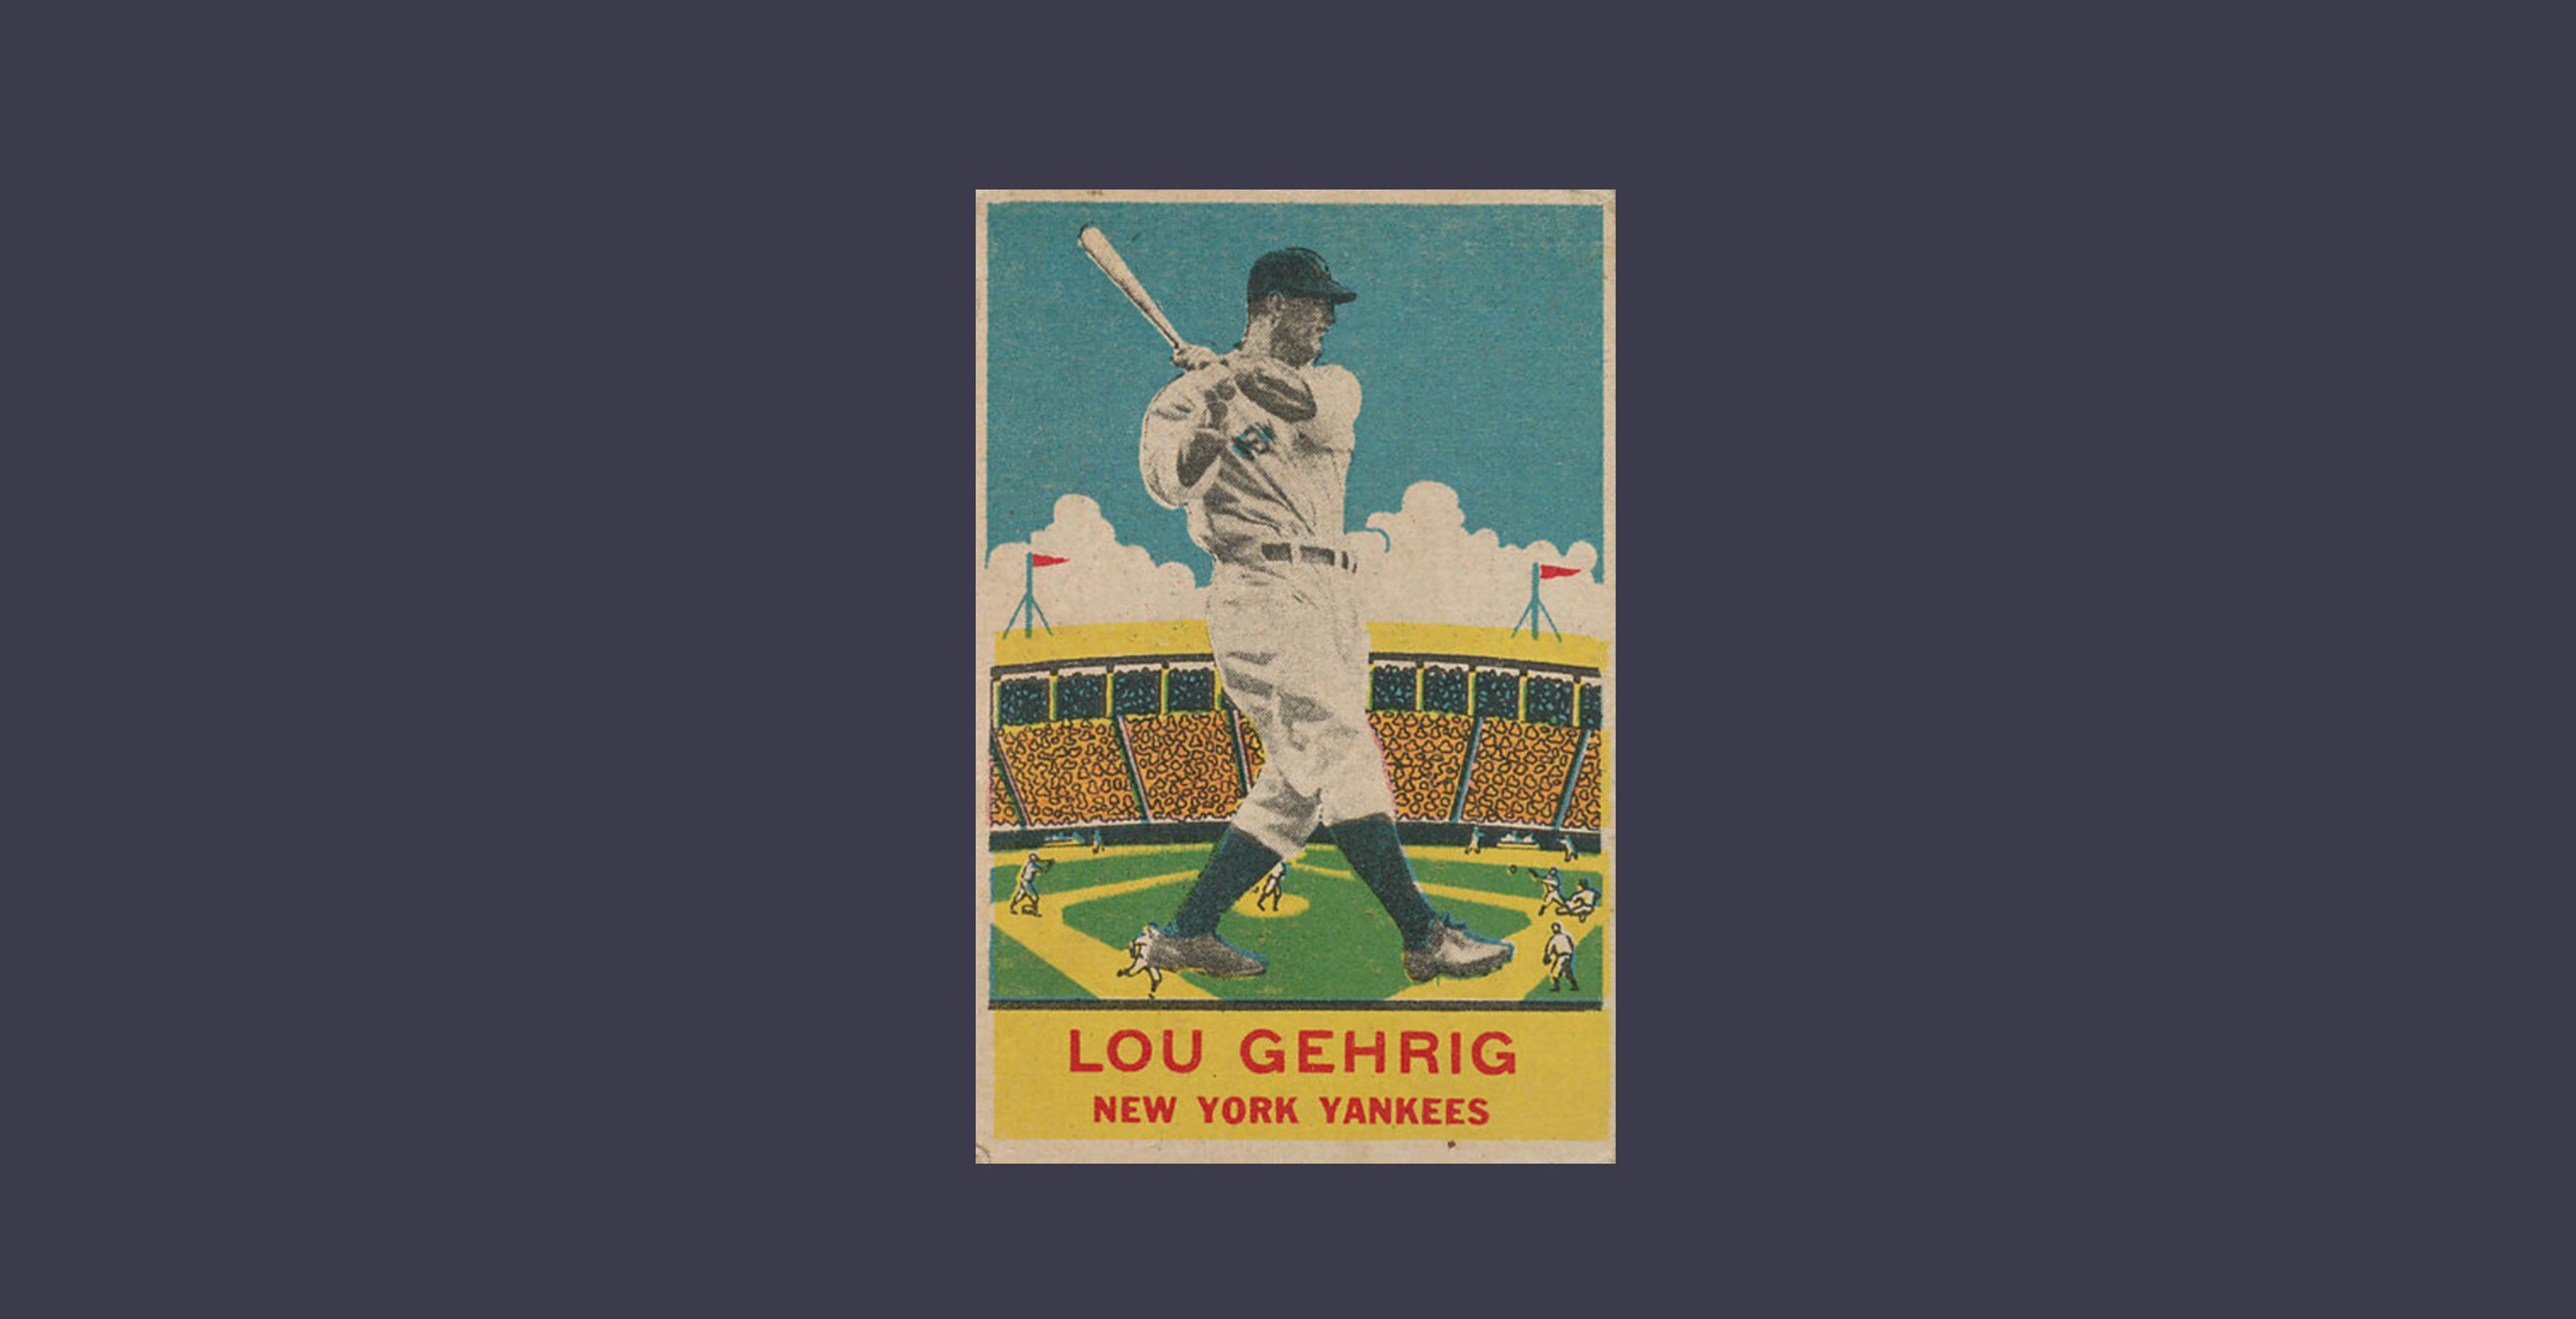 Card featuring a man holding a baseball bat